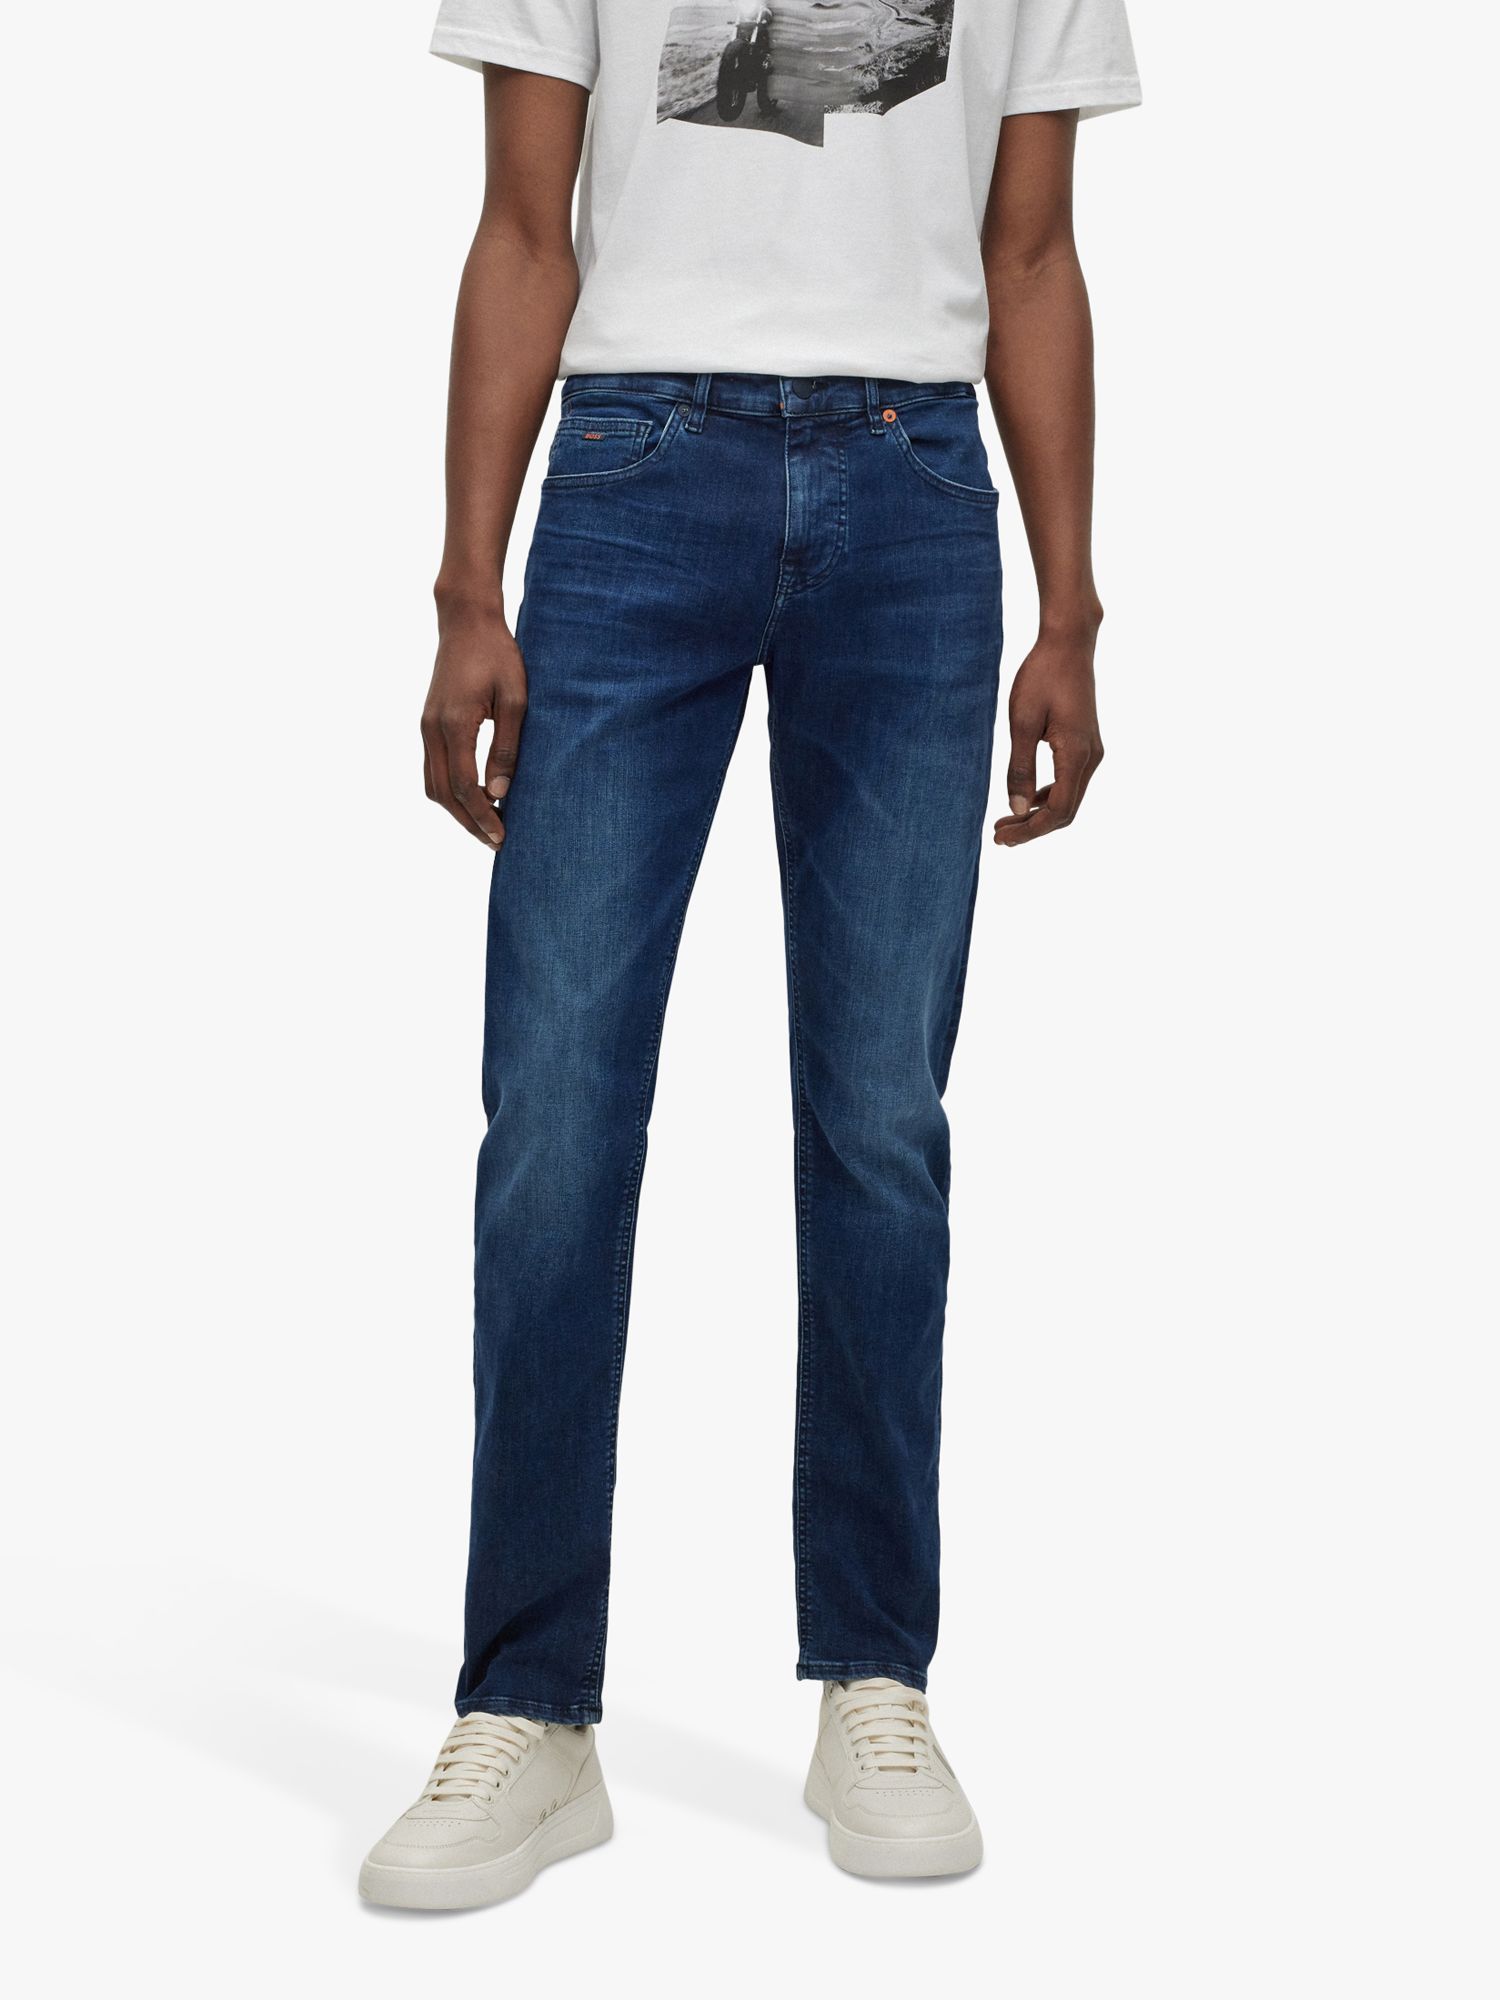 BOSS Delaware Slim Fit Jeans, Navy at John Lewis & Partners